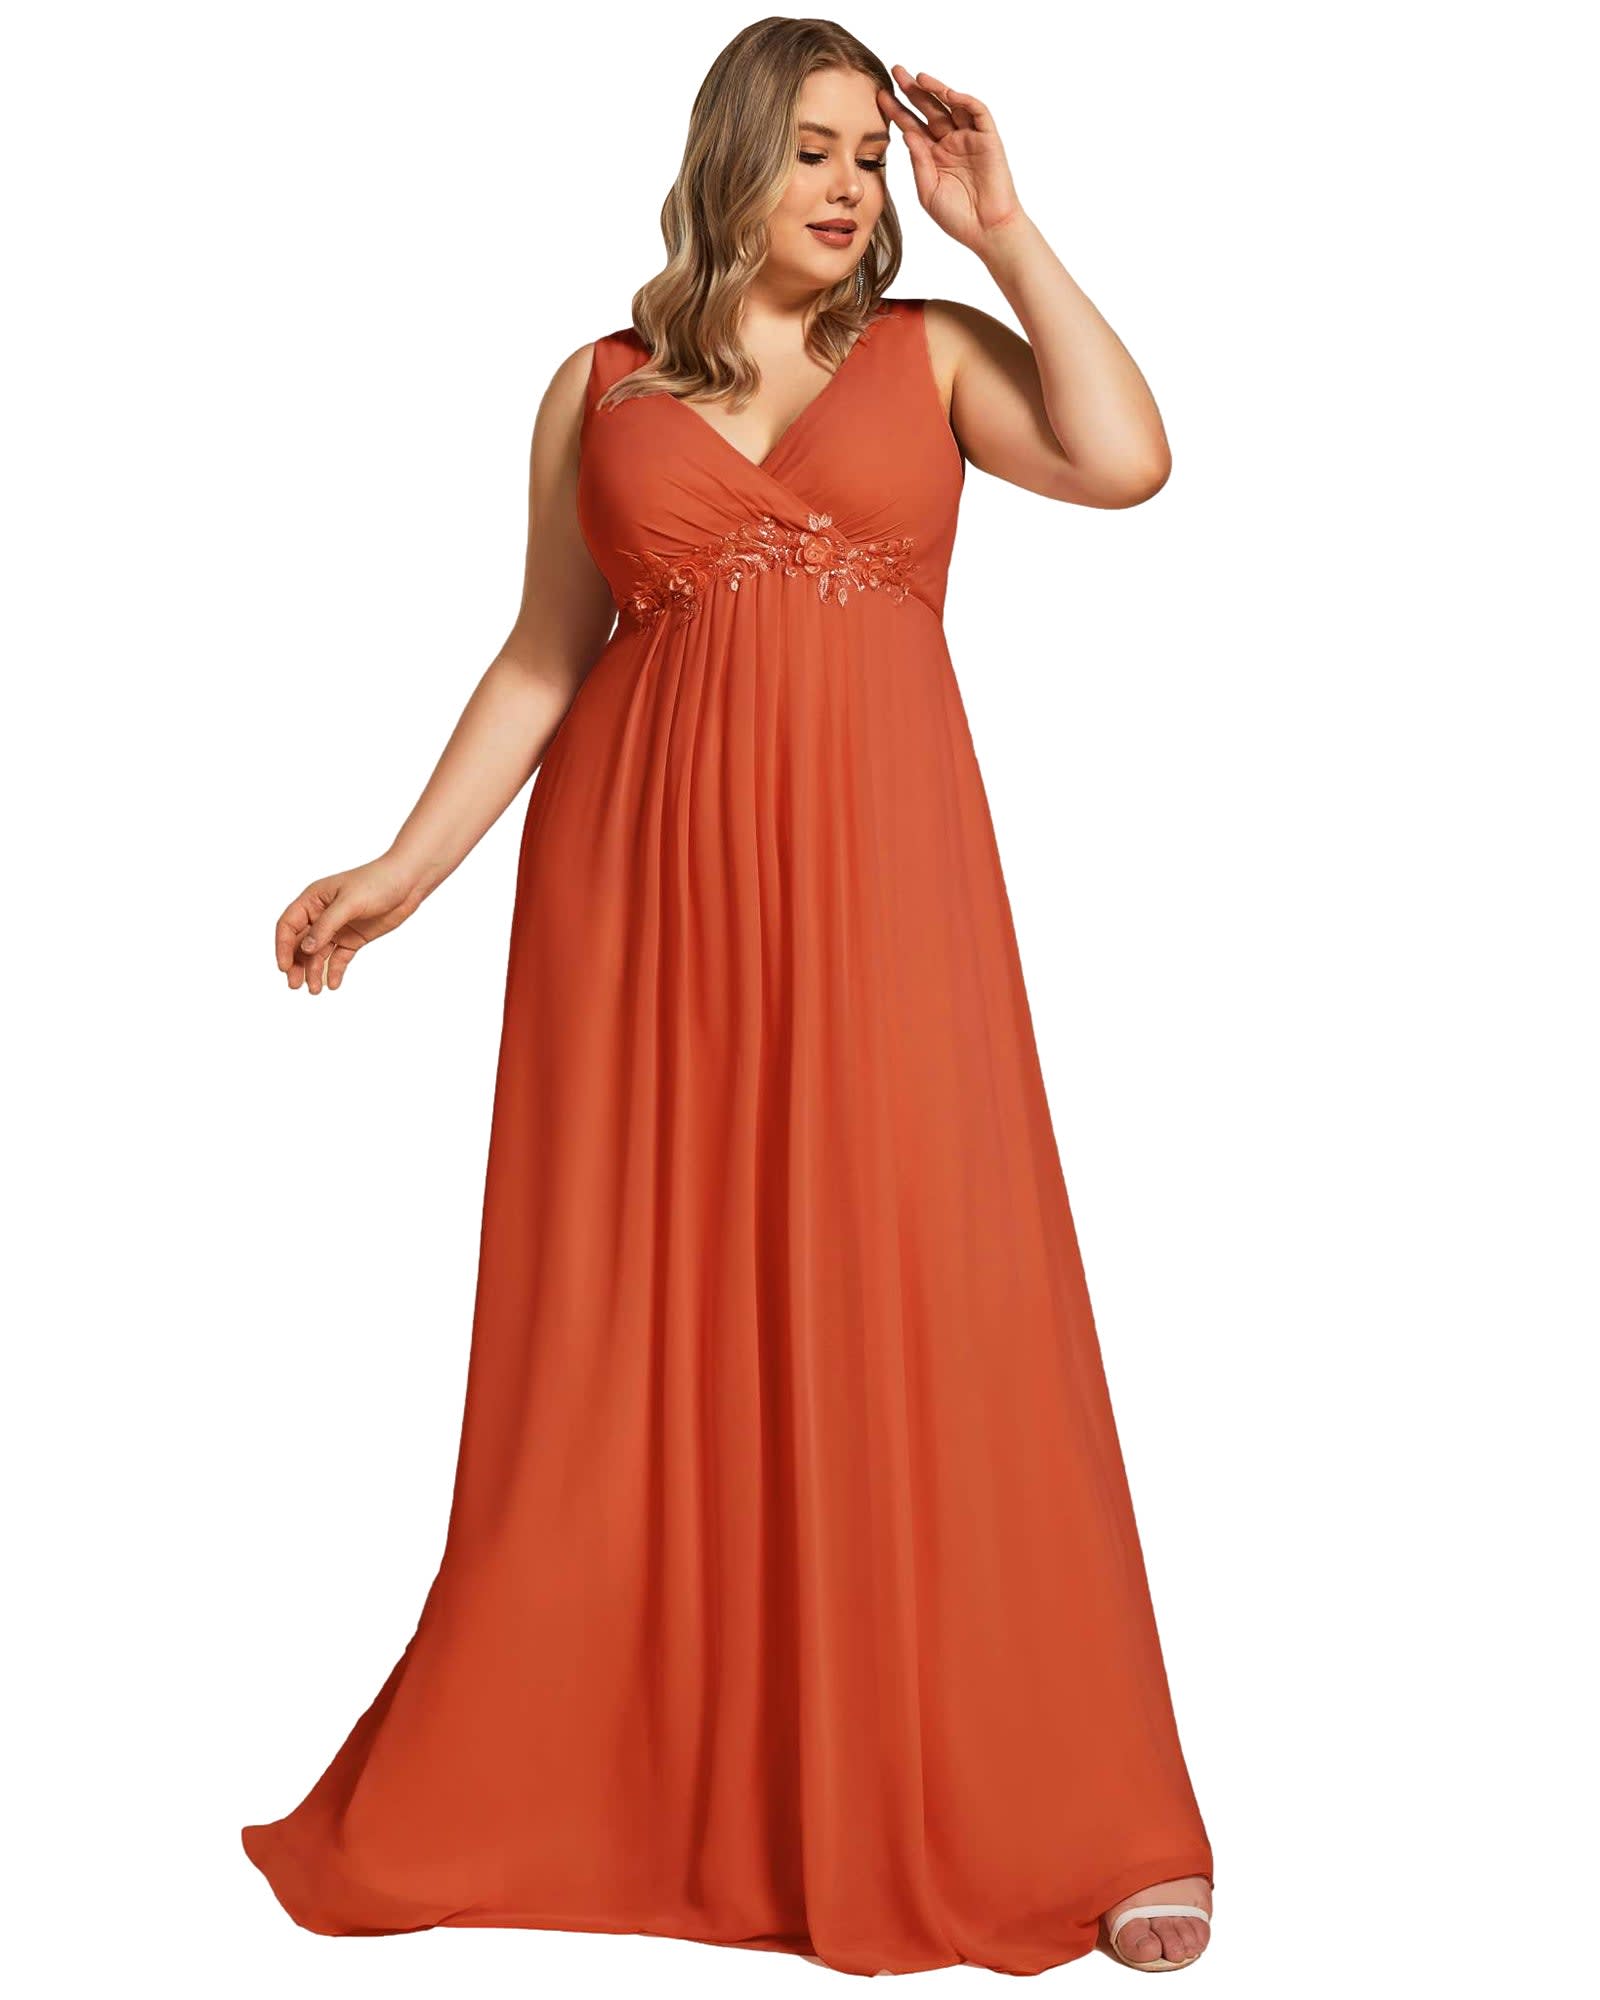 Floral Applique Sleeveless Chiffon Long Formal Evening Dress | Burnt Orange